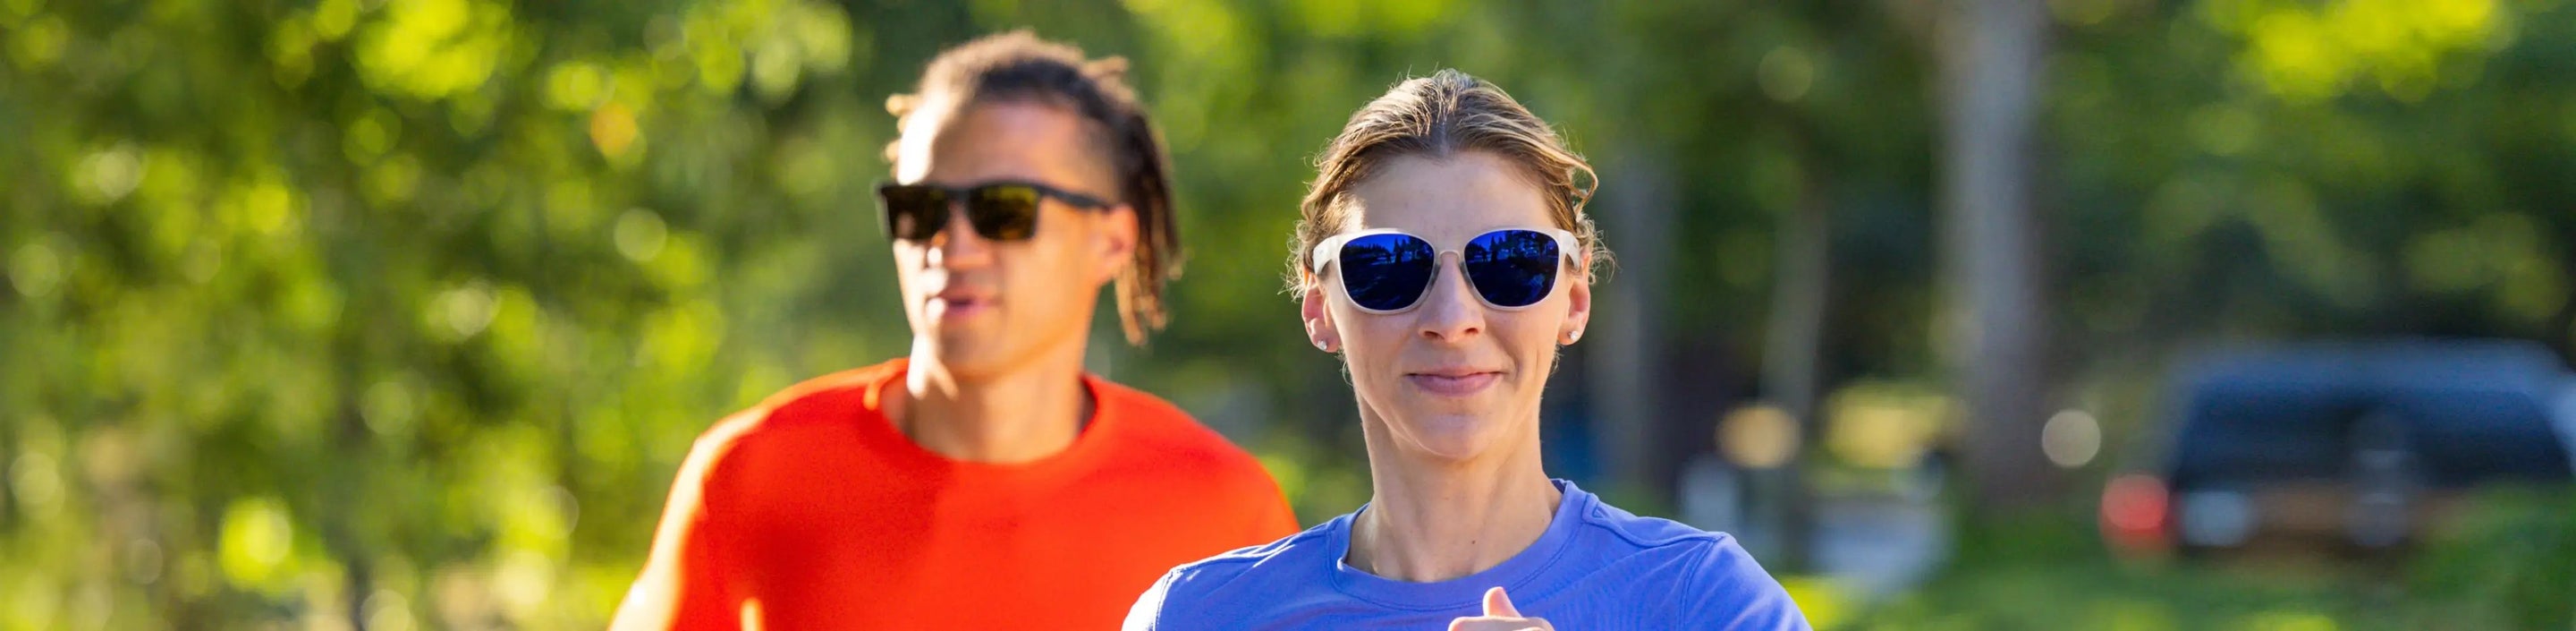 Runners In Stride Wearing Sunglasses